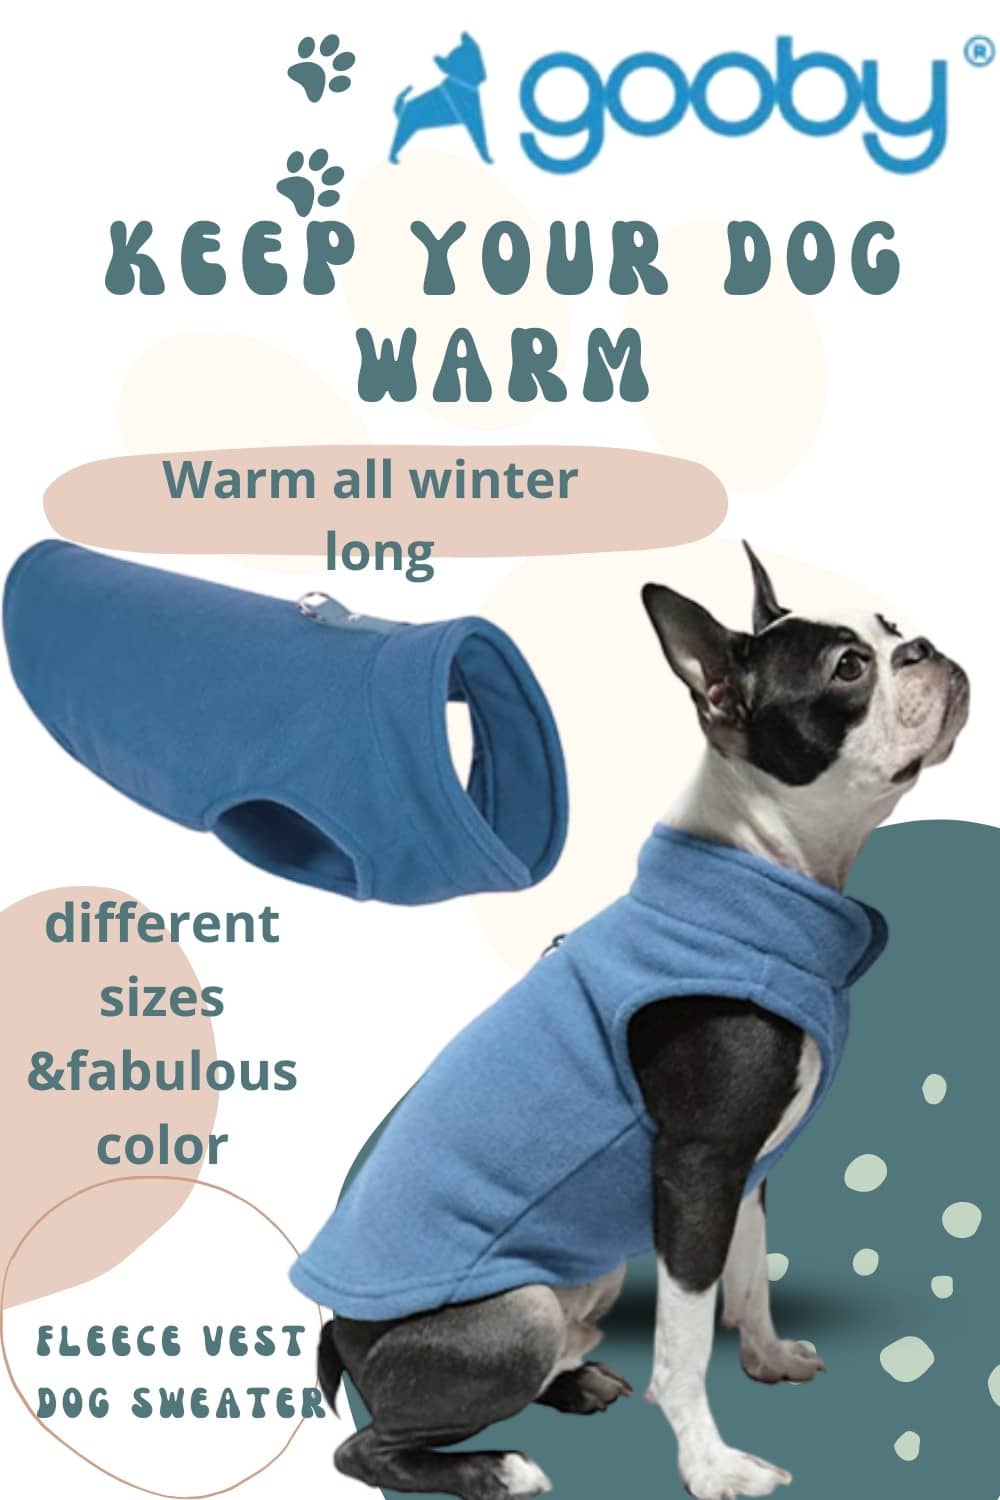 fleece vest dog sweater